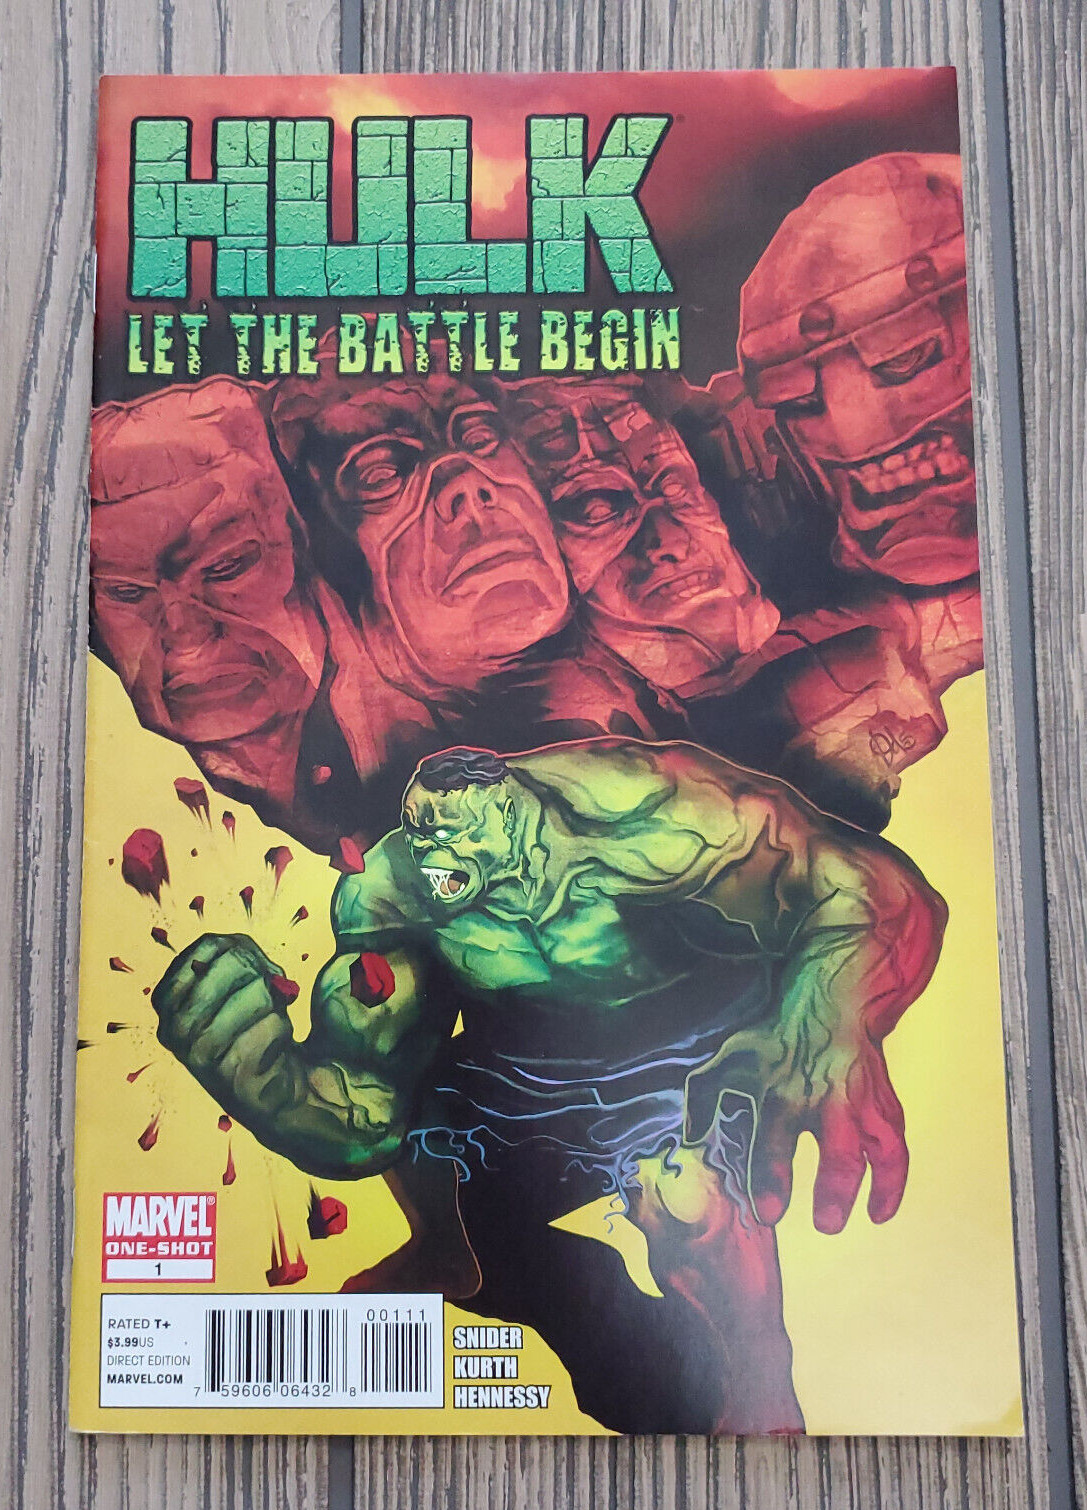 Hulk: Let the Battle Begin #1 (Marvel Comics 2010) One-Shot Snider, Kurth